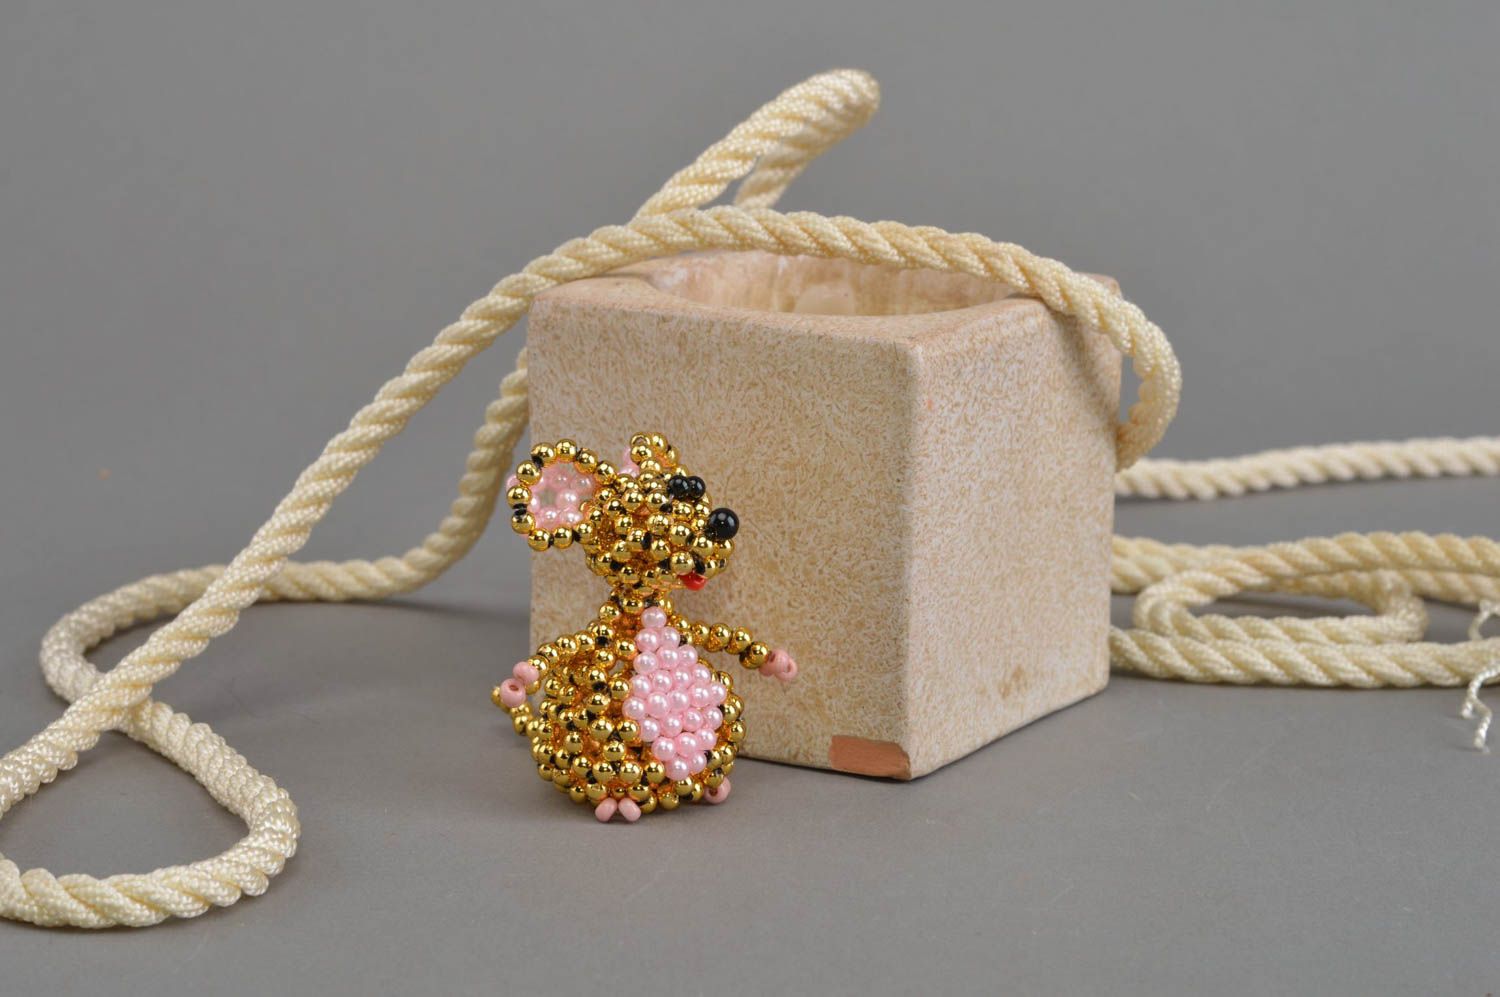 Handmade miniature collectible bead woven animal figurine of golden mouse photo 1